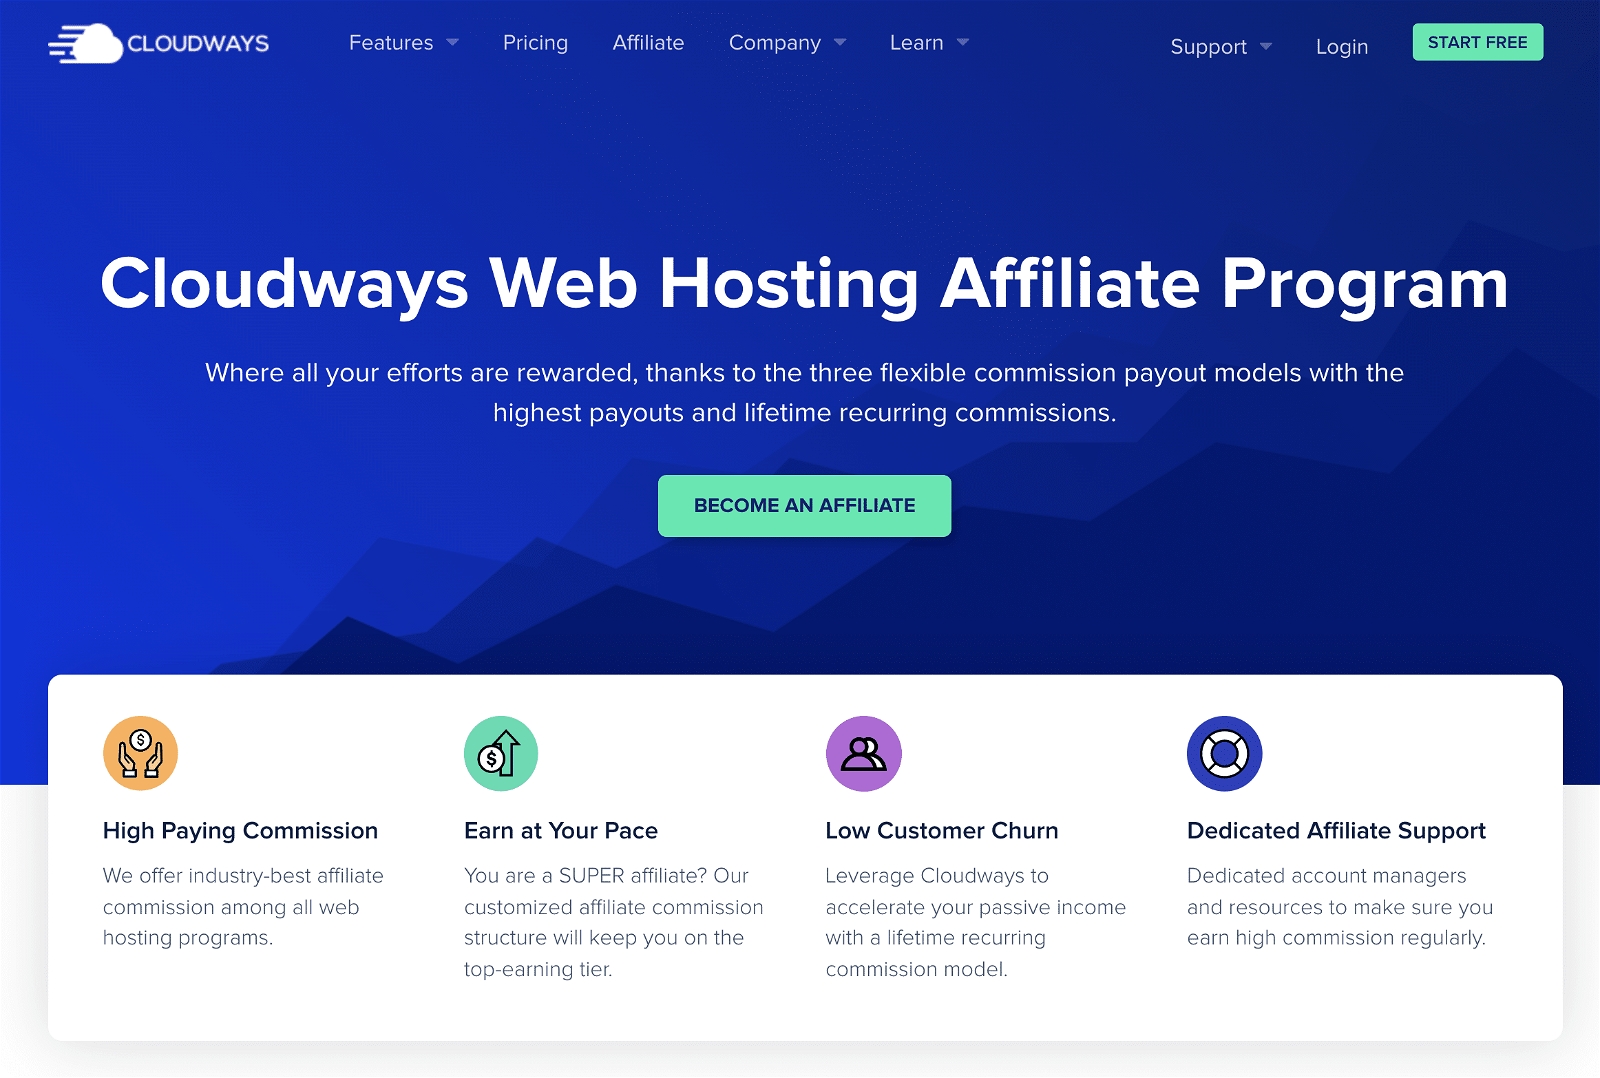 cloudways web hosting affiliate program